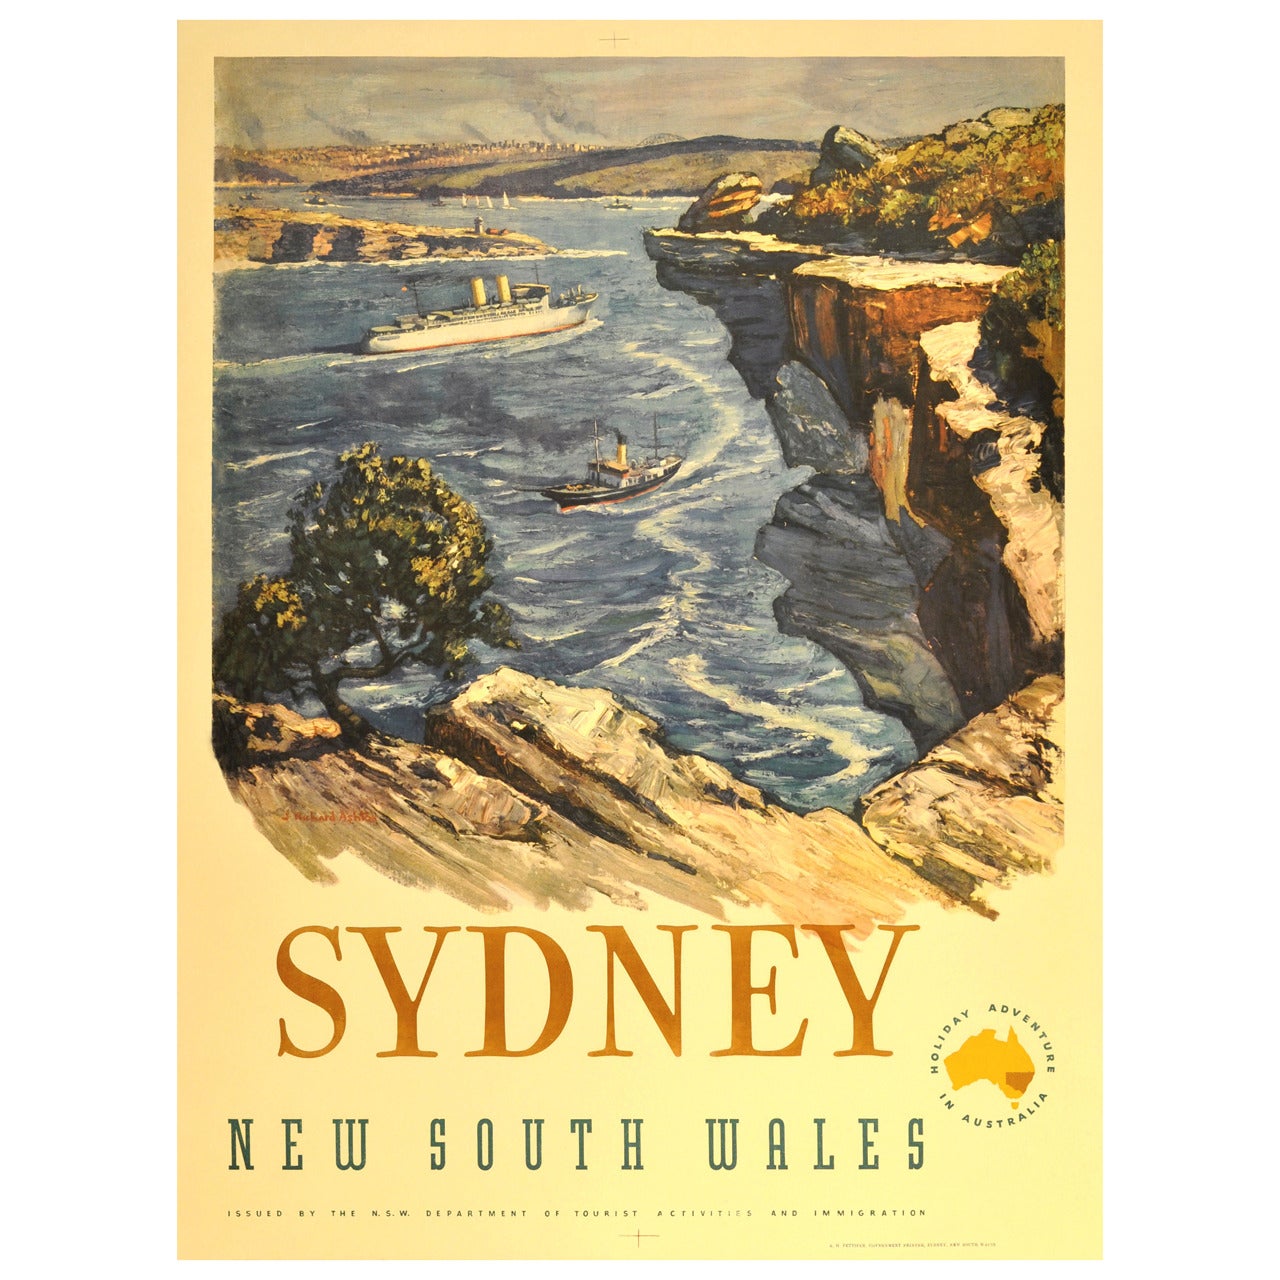 Original Vintage Travel Advertising Poster for Sydney Australia, New South Wales